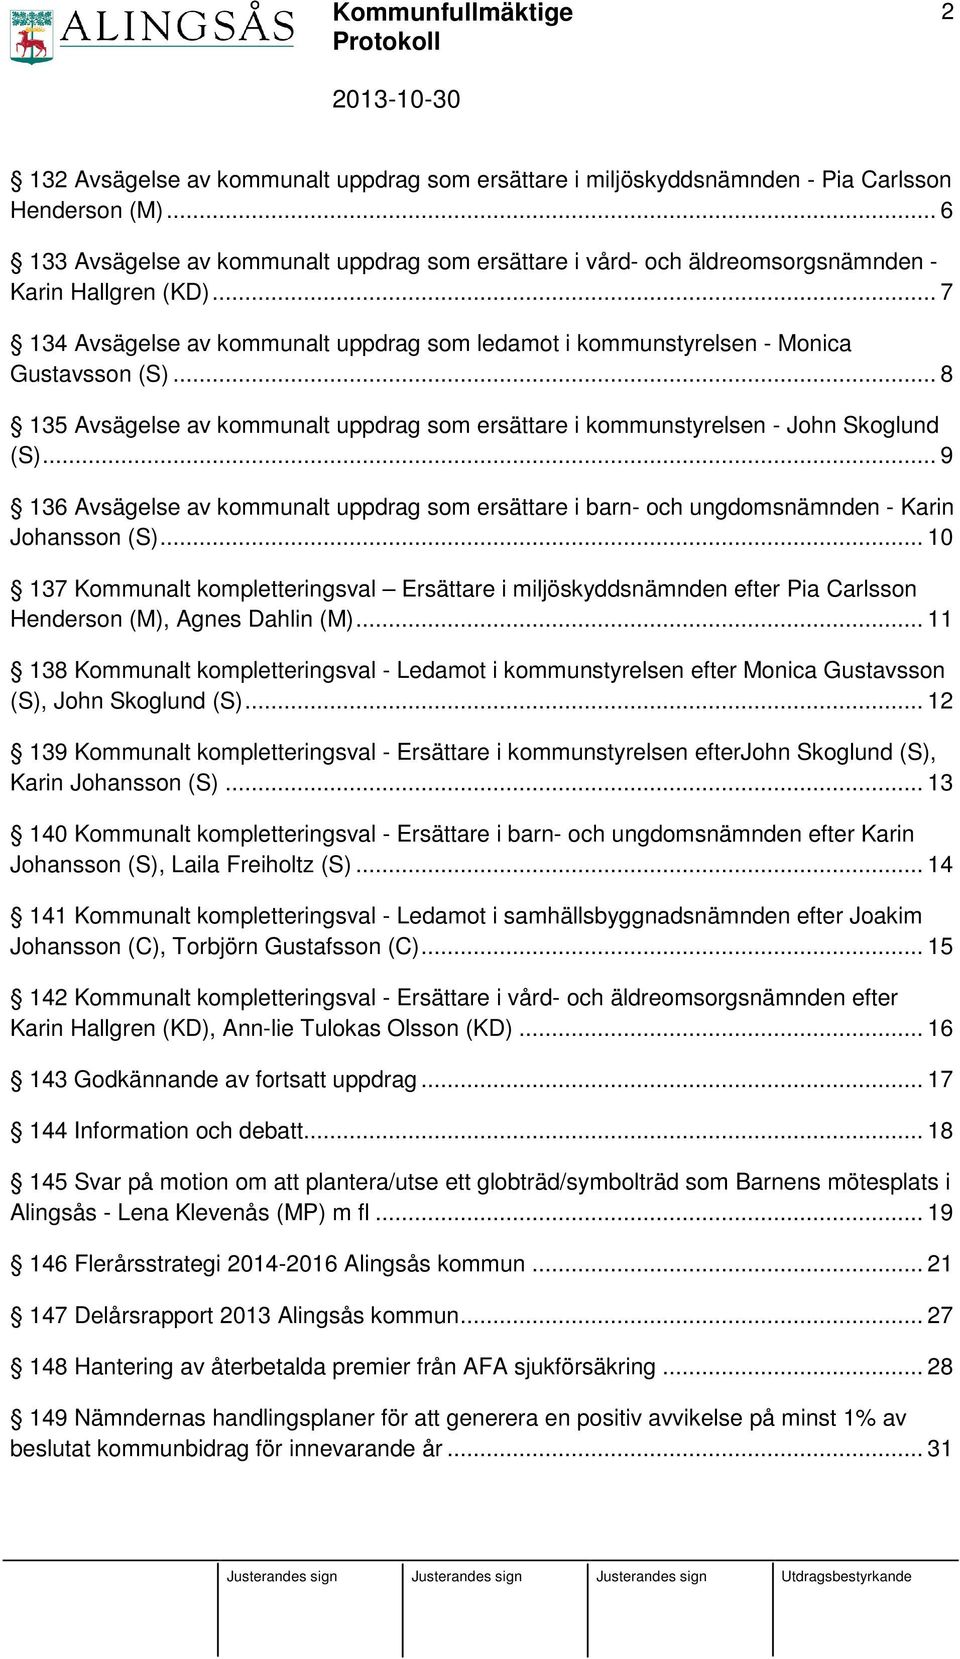 .. 8 135 Avsägelse av kommunalt uppdrag som ersättare i kommunstyrelsen - John Skoglund (S)... 9 136 Avsägelse av kommunalt uppdrag som ersättare i barn- och ungdomsnämnden - Karin Johansson (S).